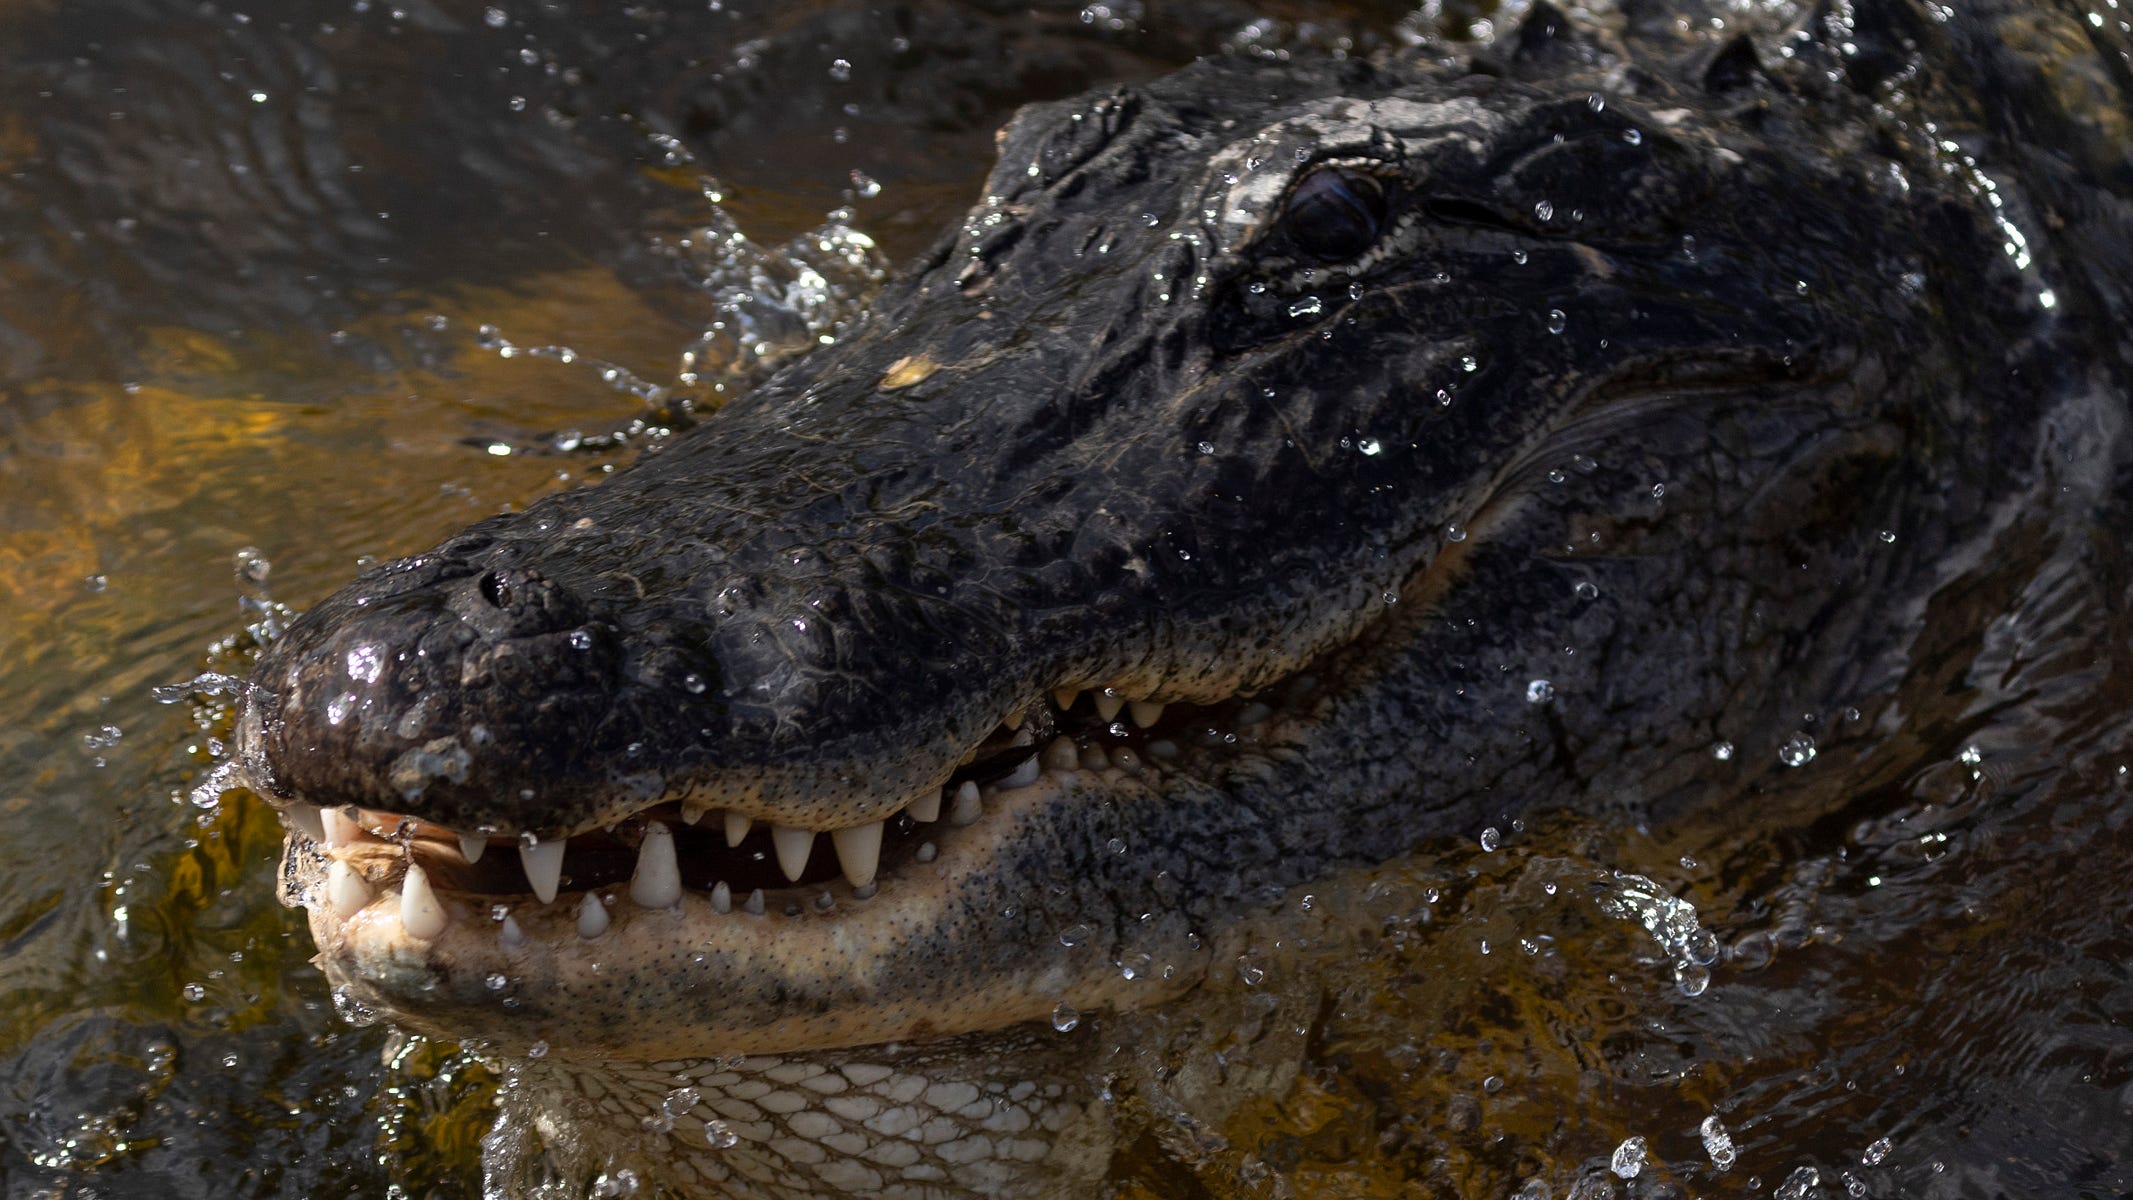 Alligator kills woman, 88, near Hilton Head, S.C. 4th US death in '22